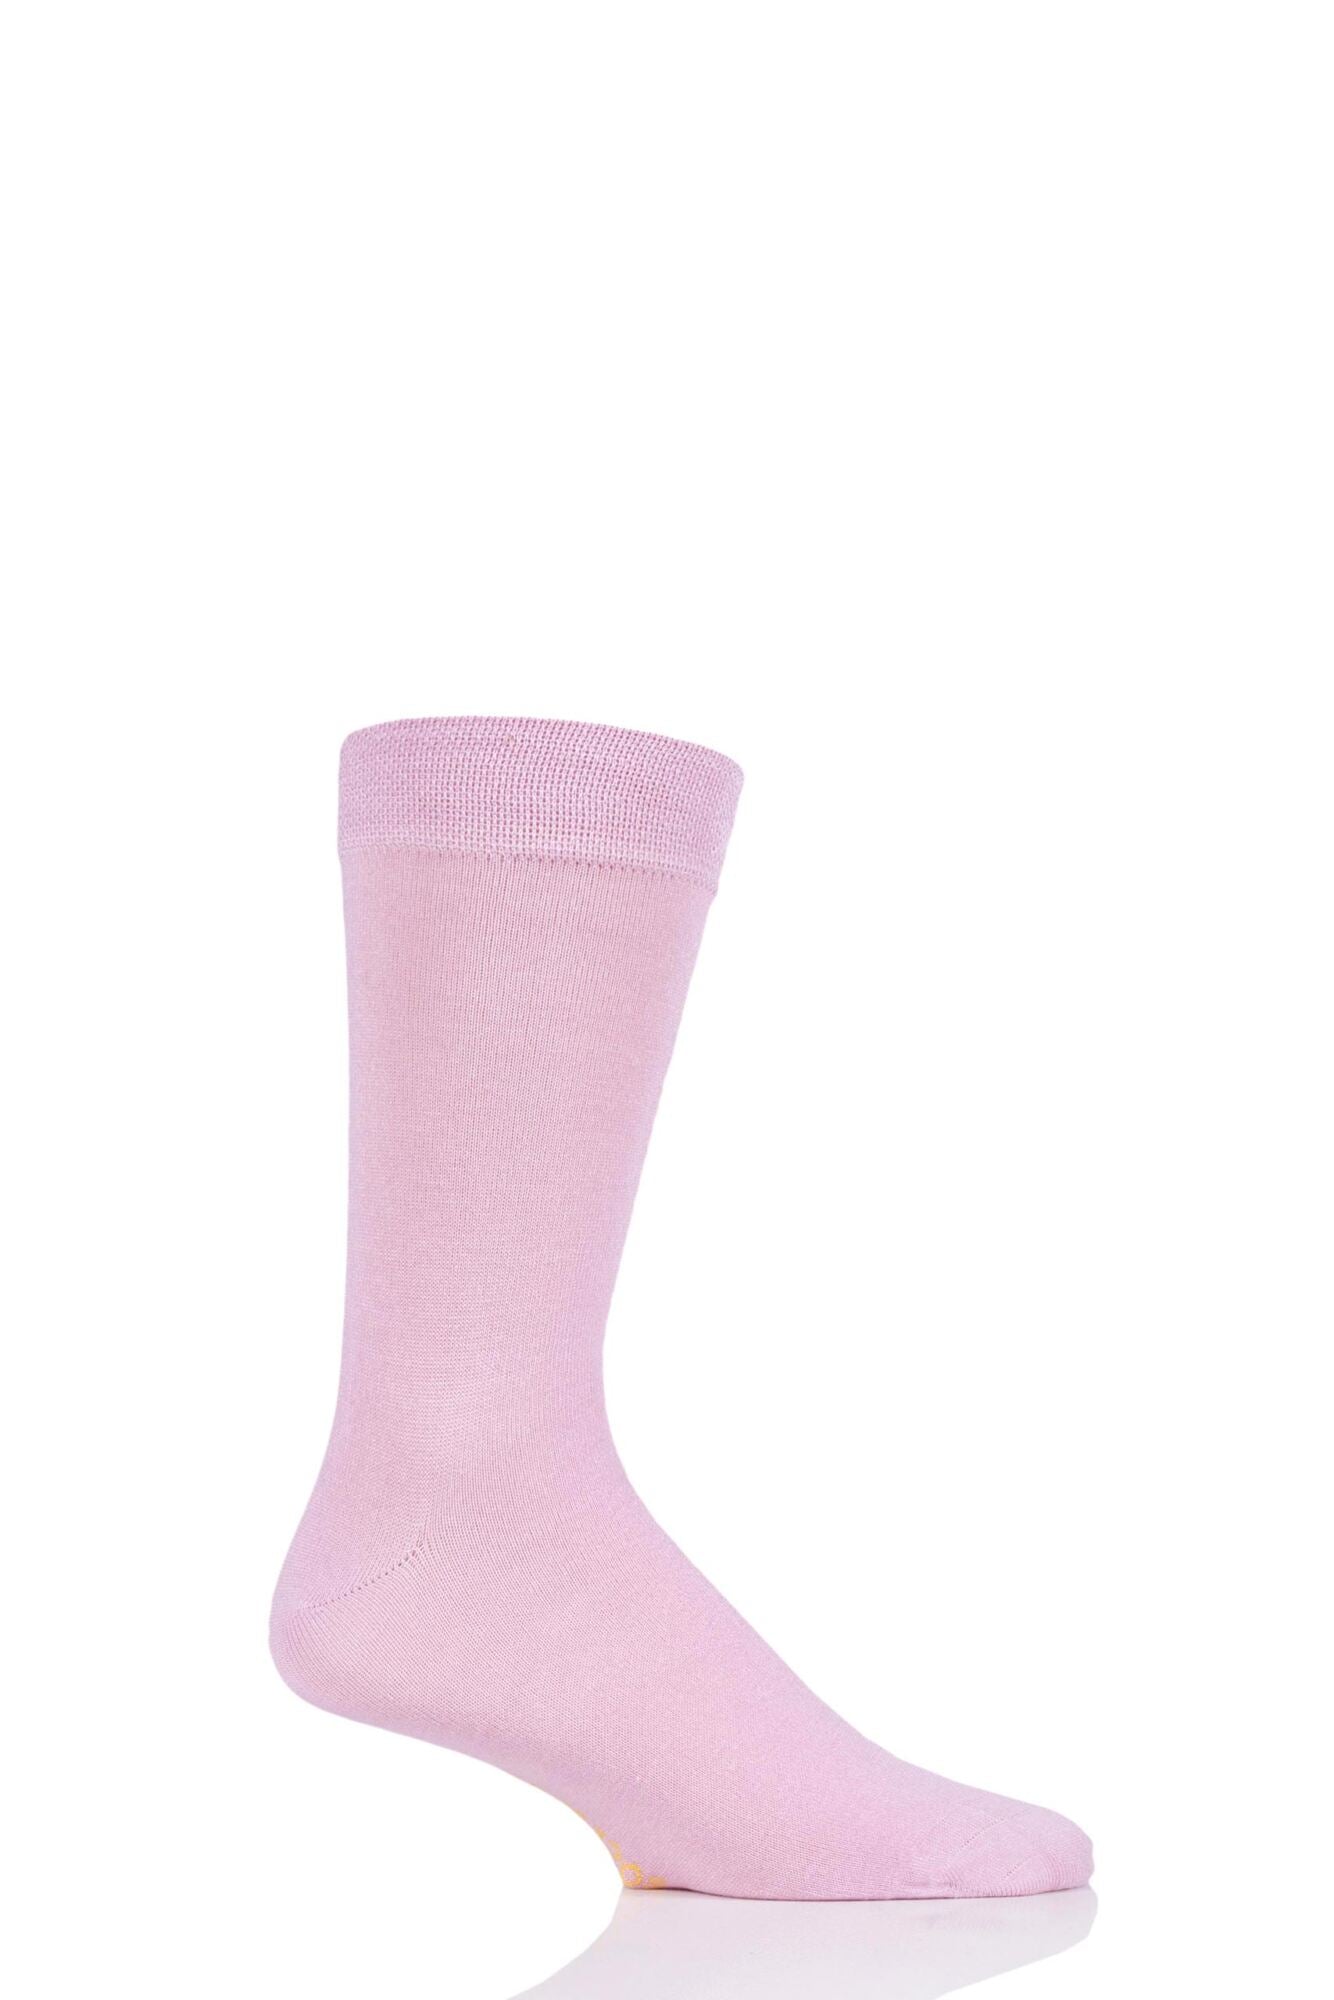 Sockshop-Mens Bamboo Socks-1 Pair Pack-Pretty in Pink